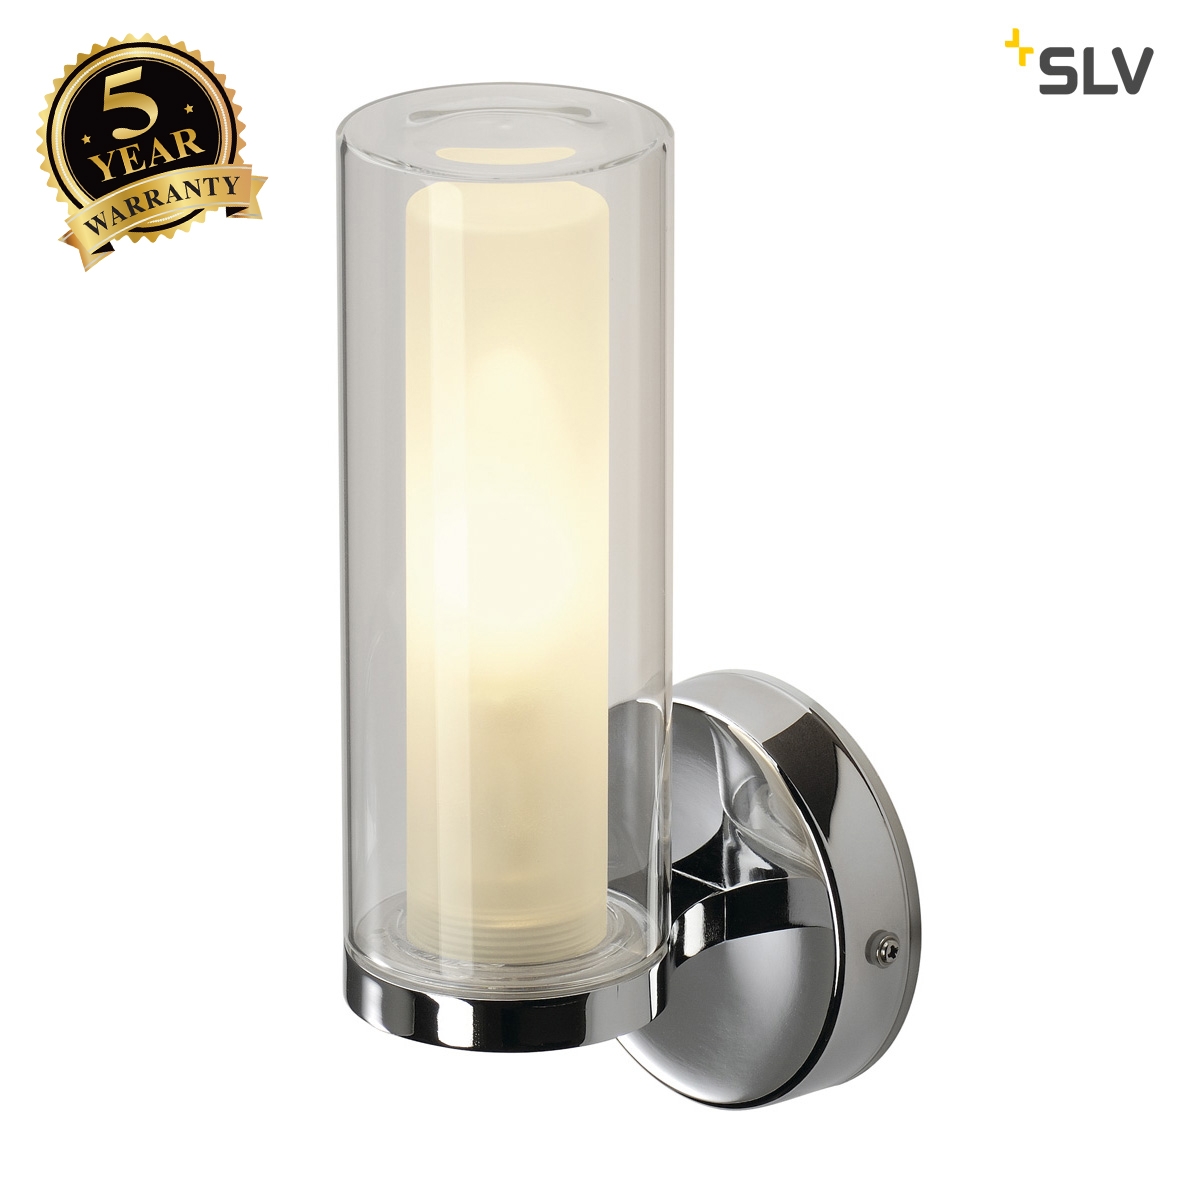 SLV Wall light, WL 105, chrome, double-glass, E14, max. 40W, IP44 149482